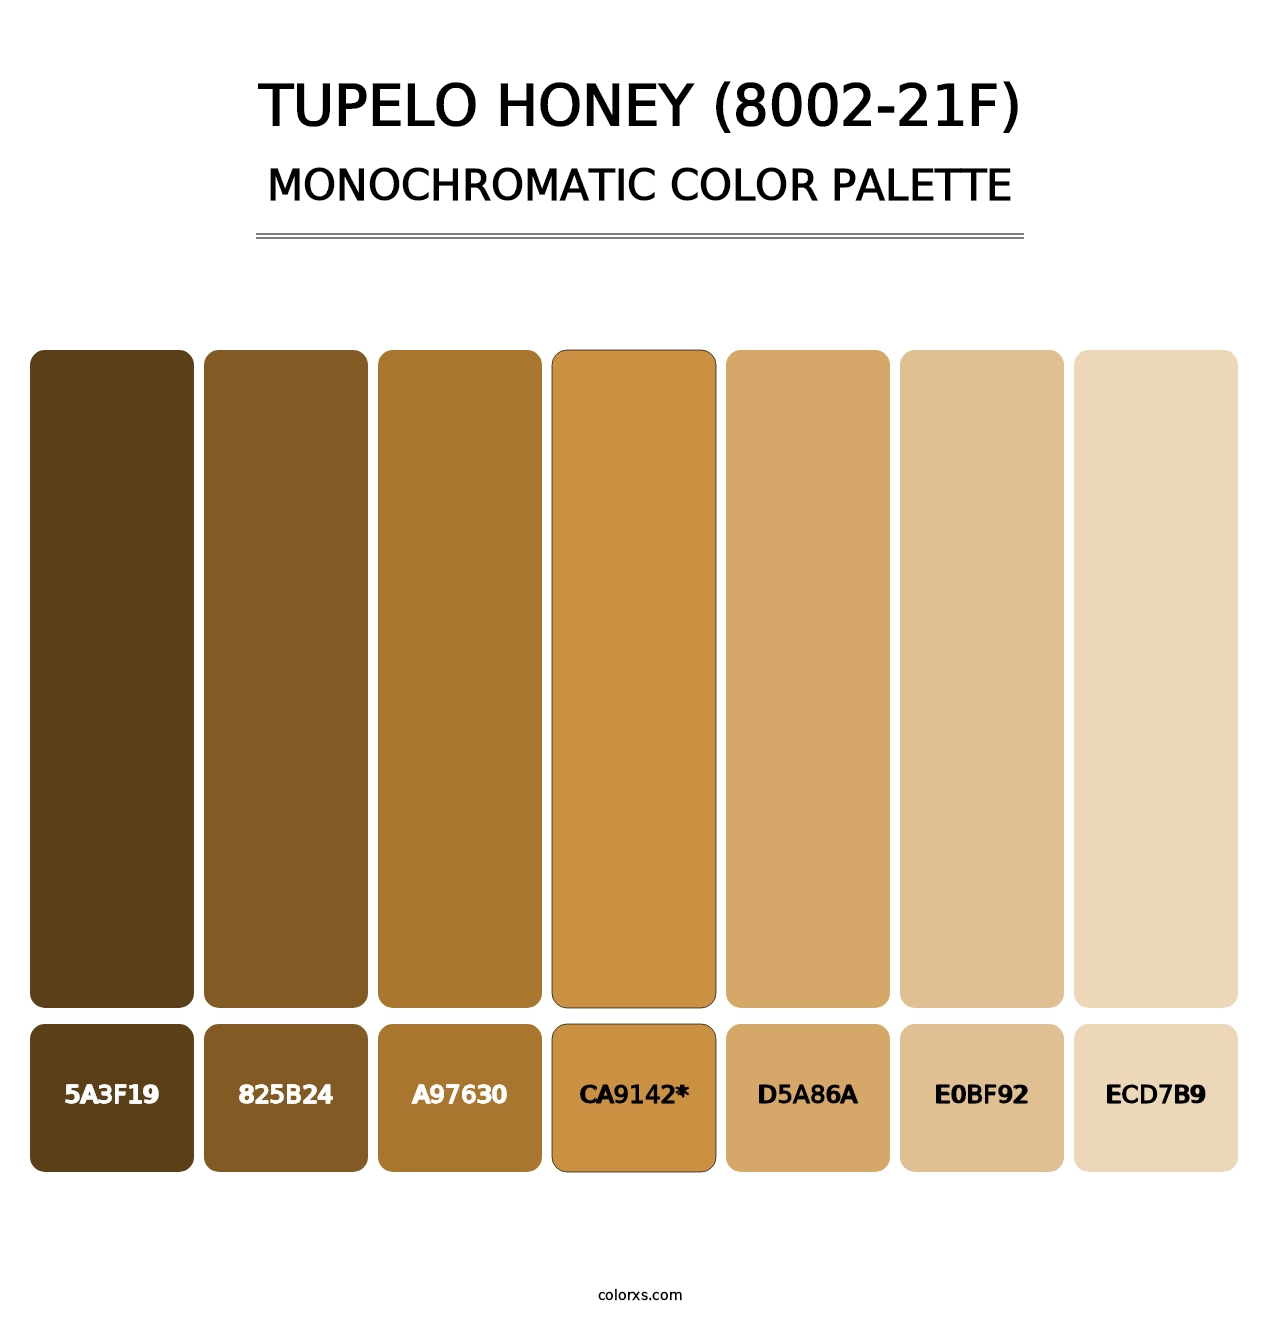 Tupelo Honey (8002-21F) - Monochromatic Color Palette